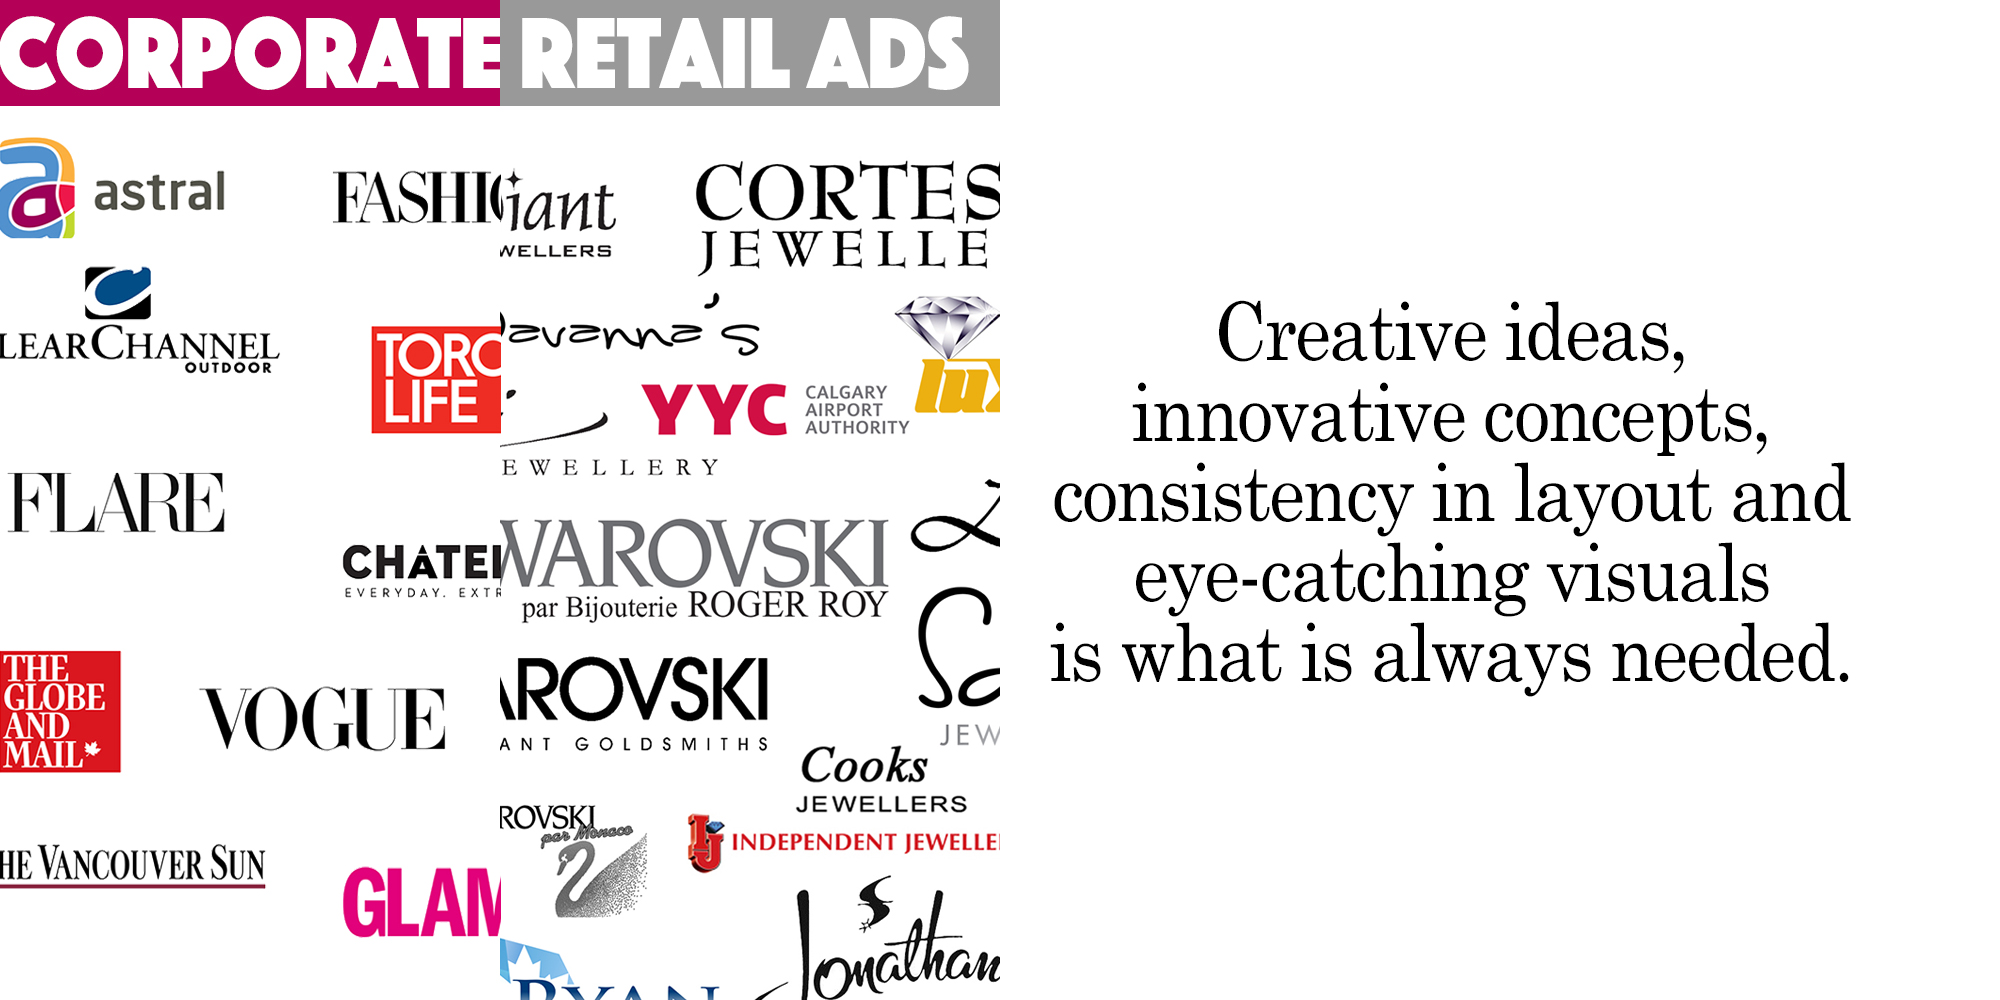 swarovski-corporate-retail-ads